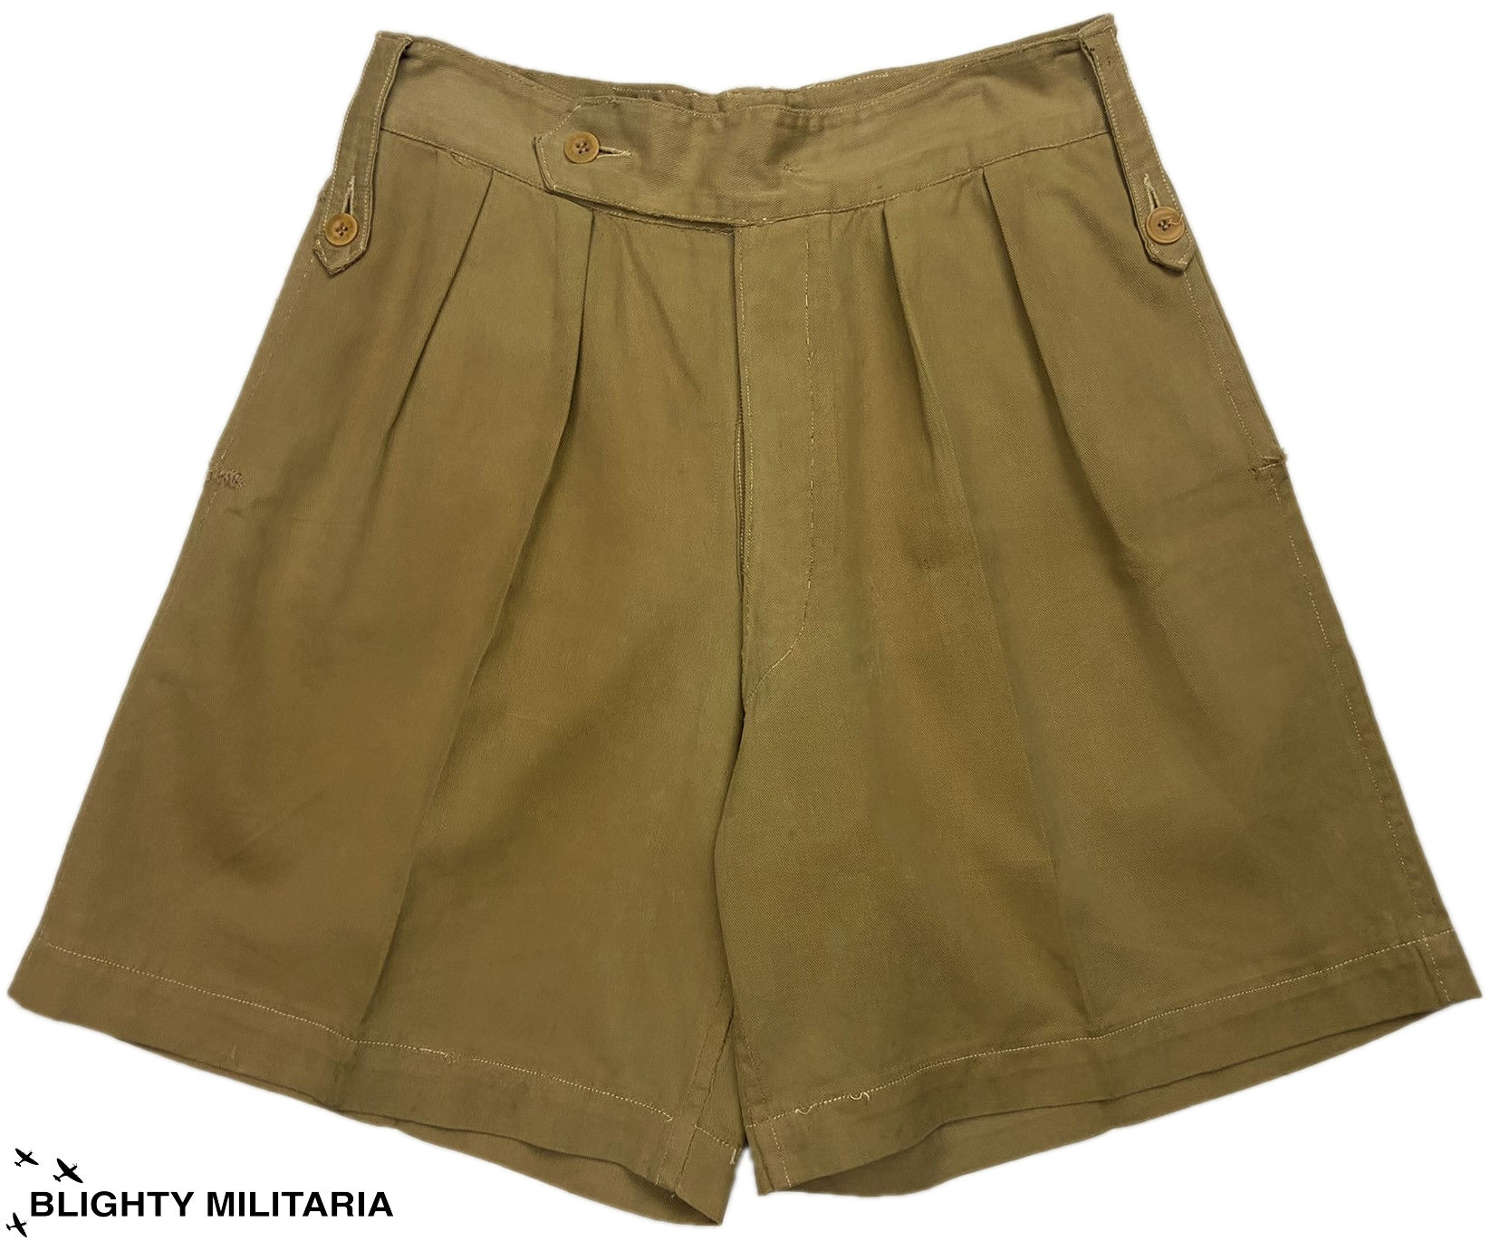 Original 1940s British Army Officer's Khaki Drill Shorts - Mantell